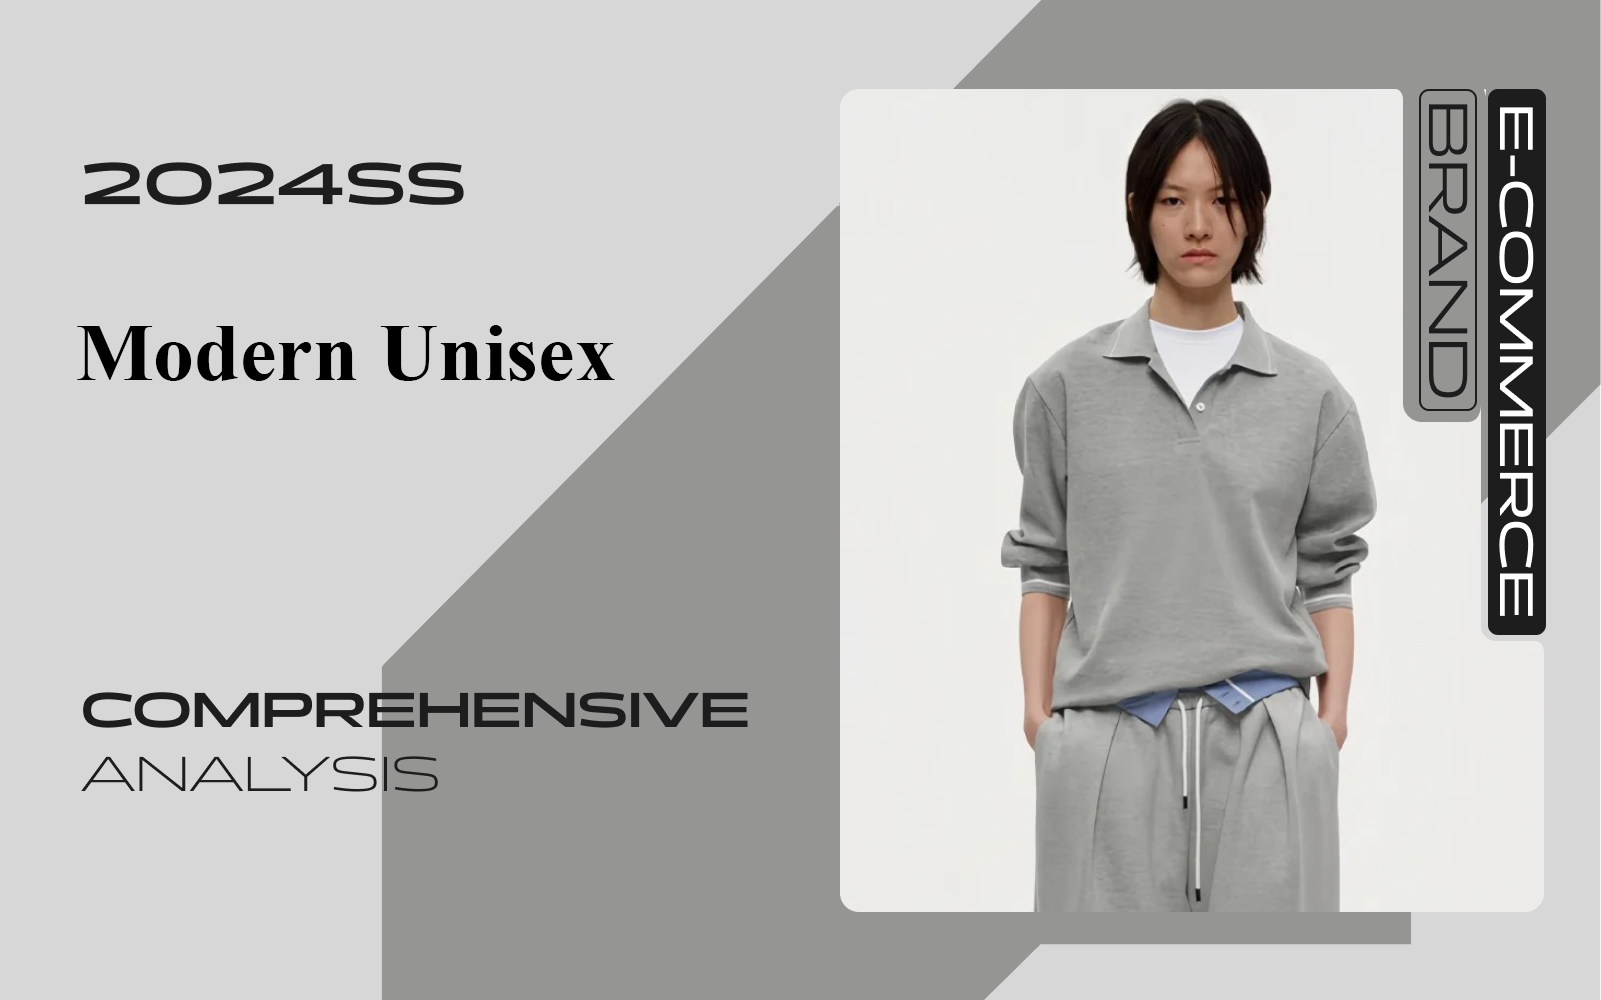 Modern Unisex -- The Popular Styles of E-Commerce Womenswear